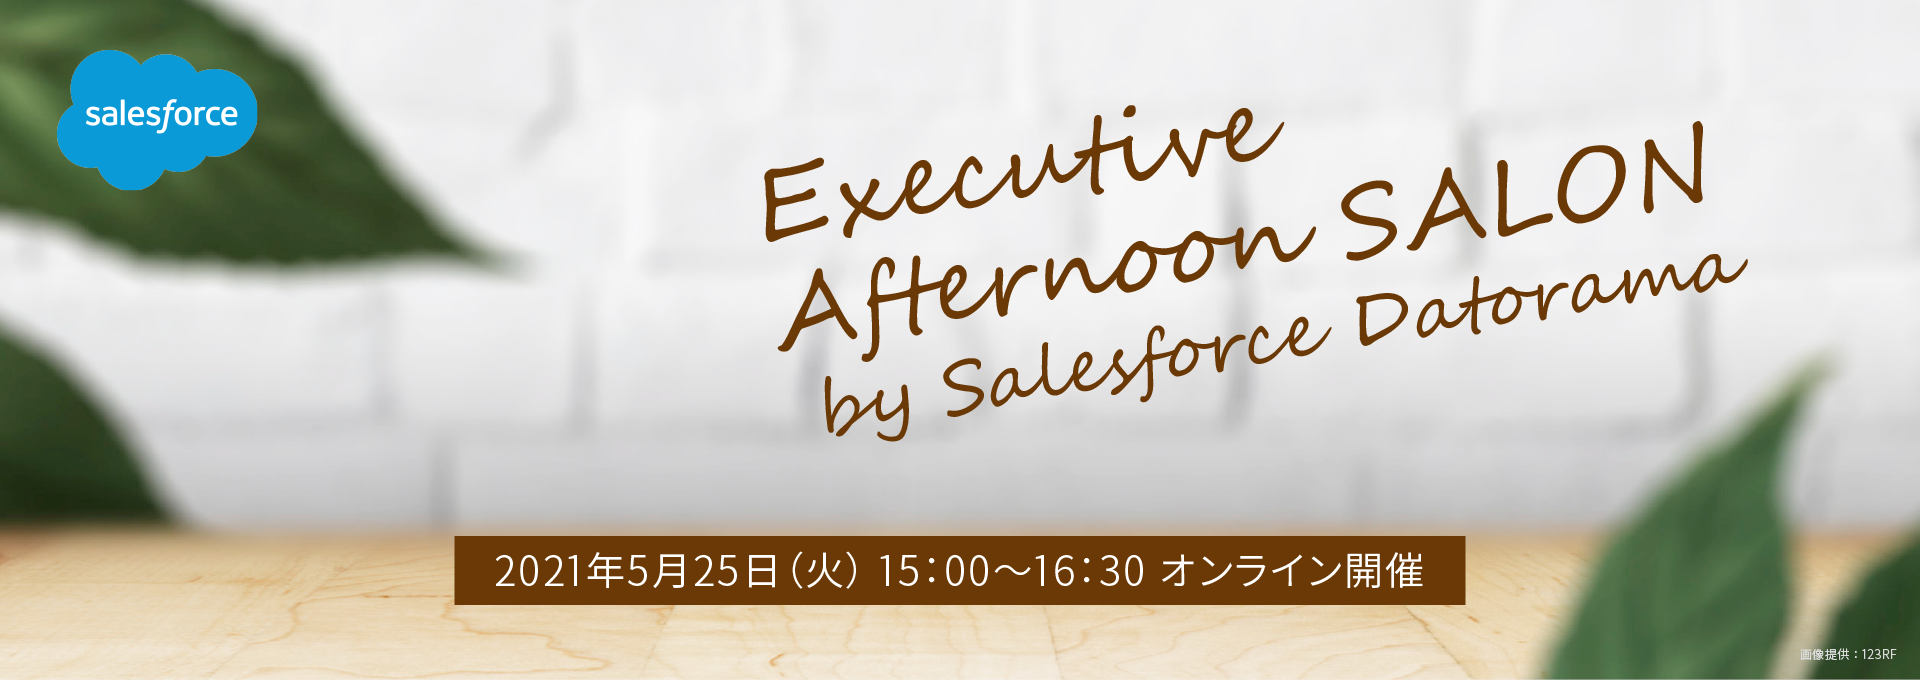 Executive Afternoon SALON by Salesforce Datorama